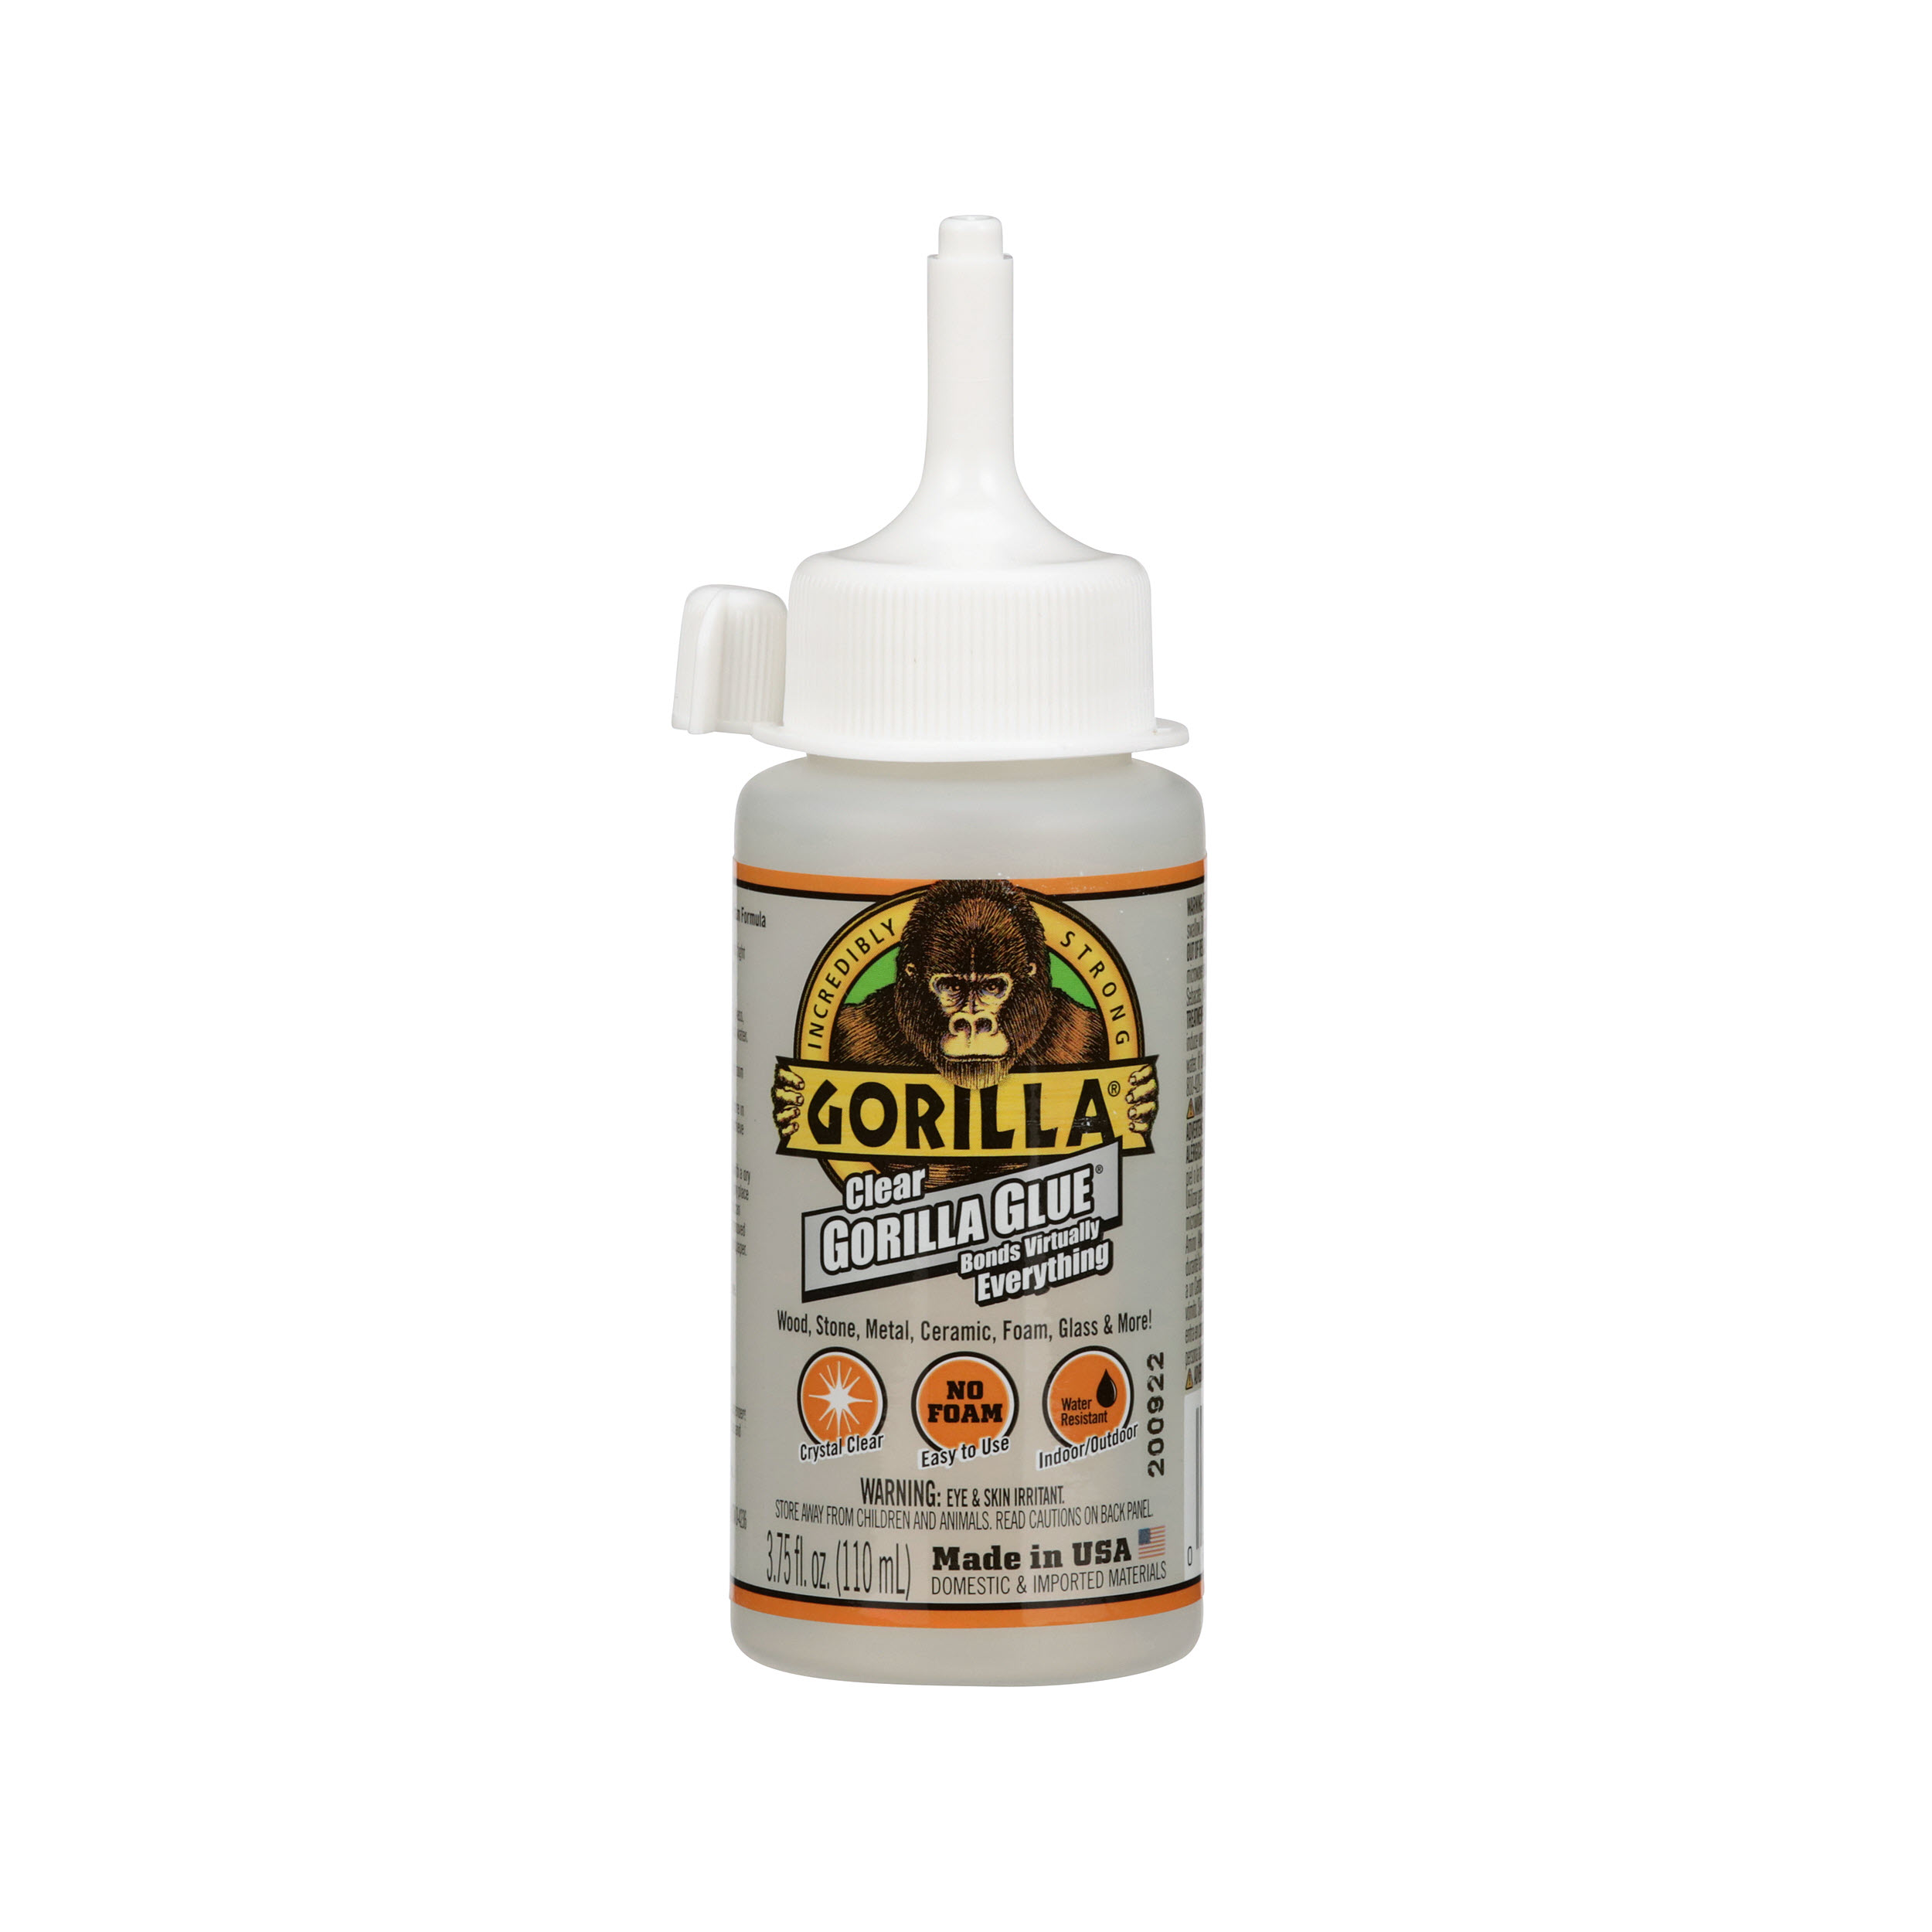 Gorilla Glue Clear, Non-Foaming, Water Resistant, Indoor & Outdoor,  Versatile Bonding Usage, Easy Application Nozzle, 3.75oz/110ml Bottle,  (Pack of 2)